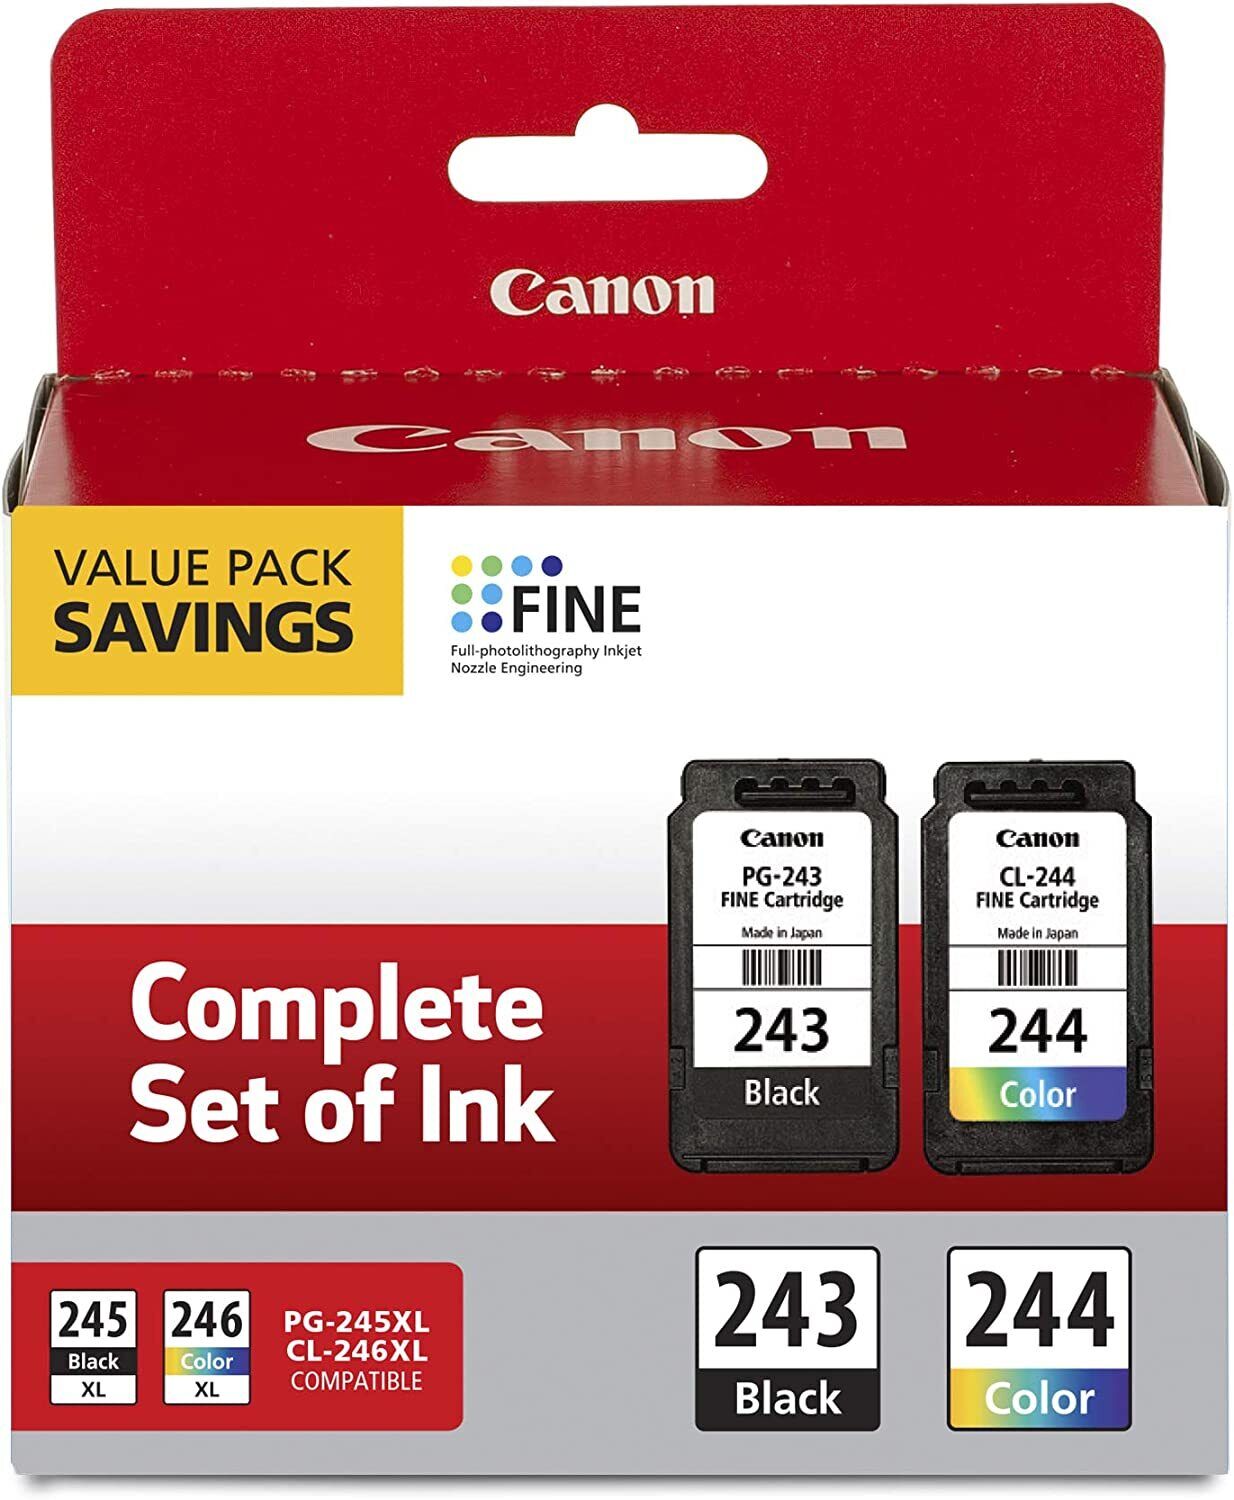 2 pack OEM Genuine Printer Cartridge for Canon Pixma PG-243 Black CL-244 Color